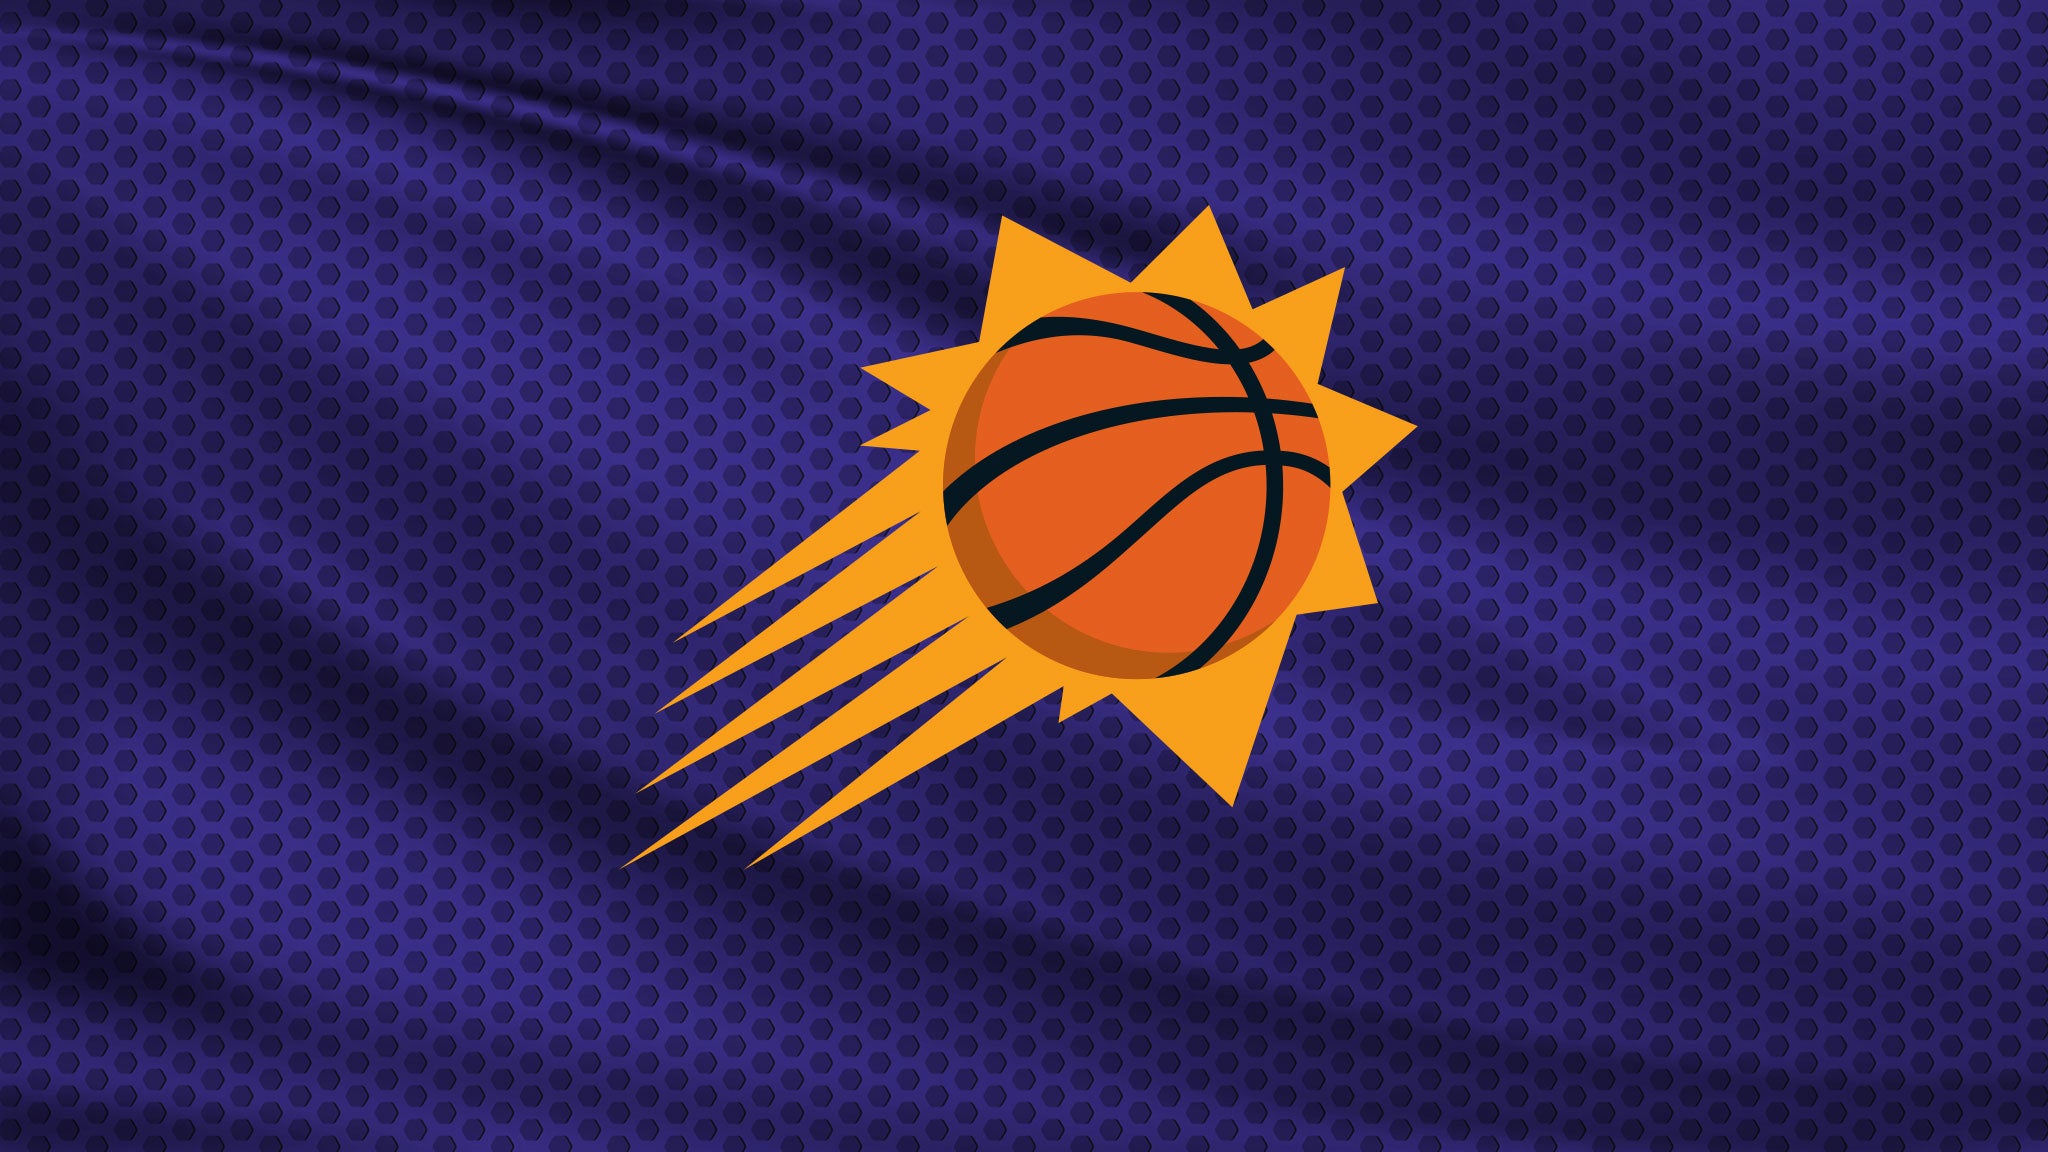 Phoenix Suns vs. Cleveland Cavaliers at Footprint Center